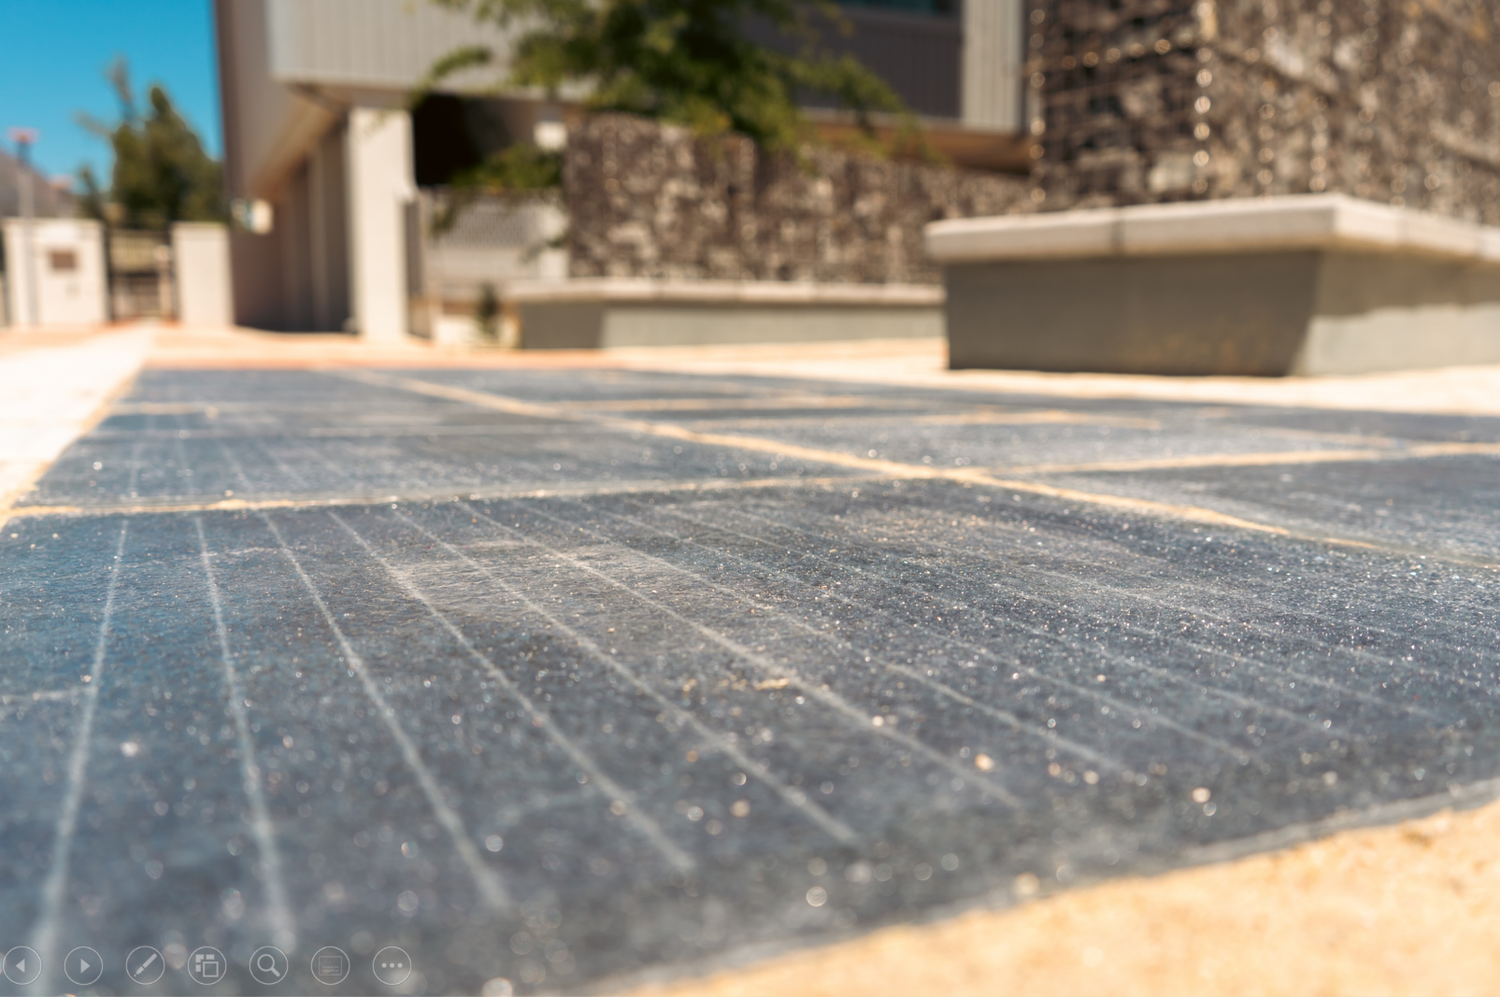 Solar PV Sidewalks: A pedestrian’s guide to grid intermittency solutions